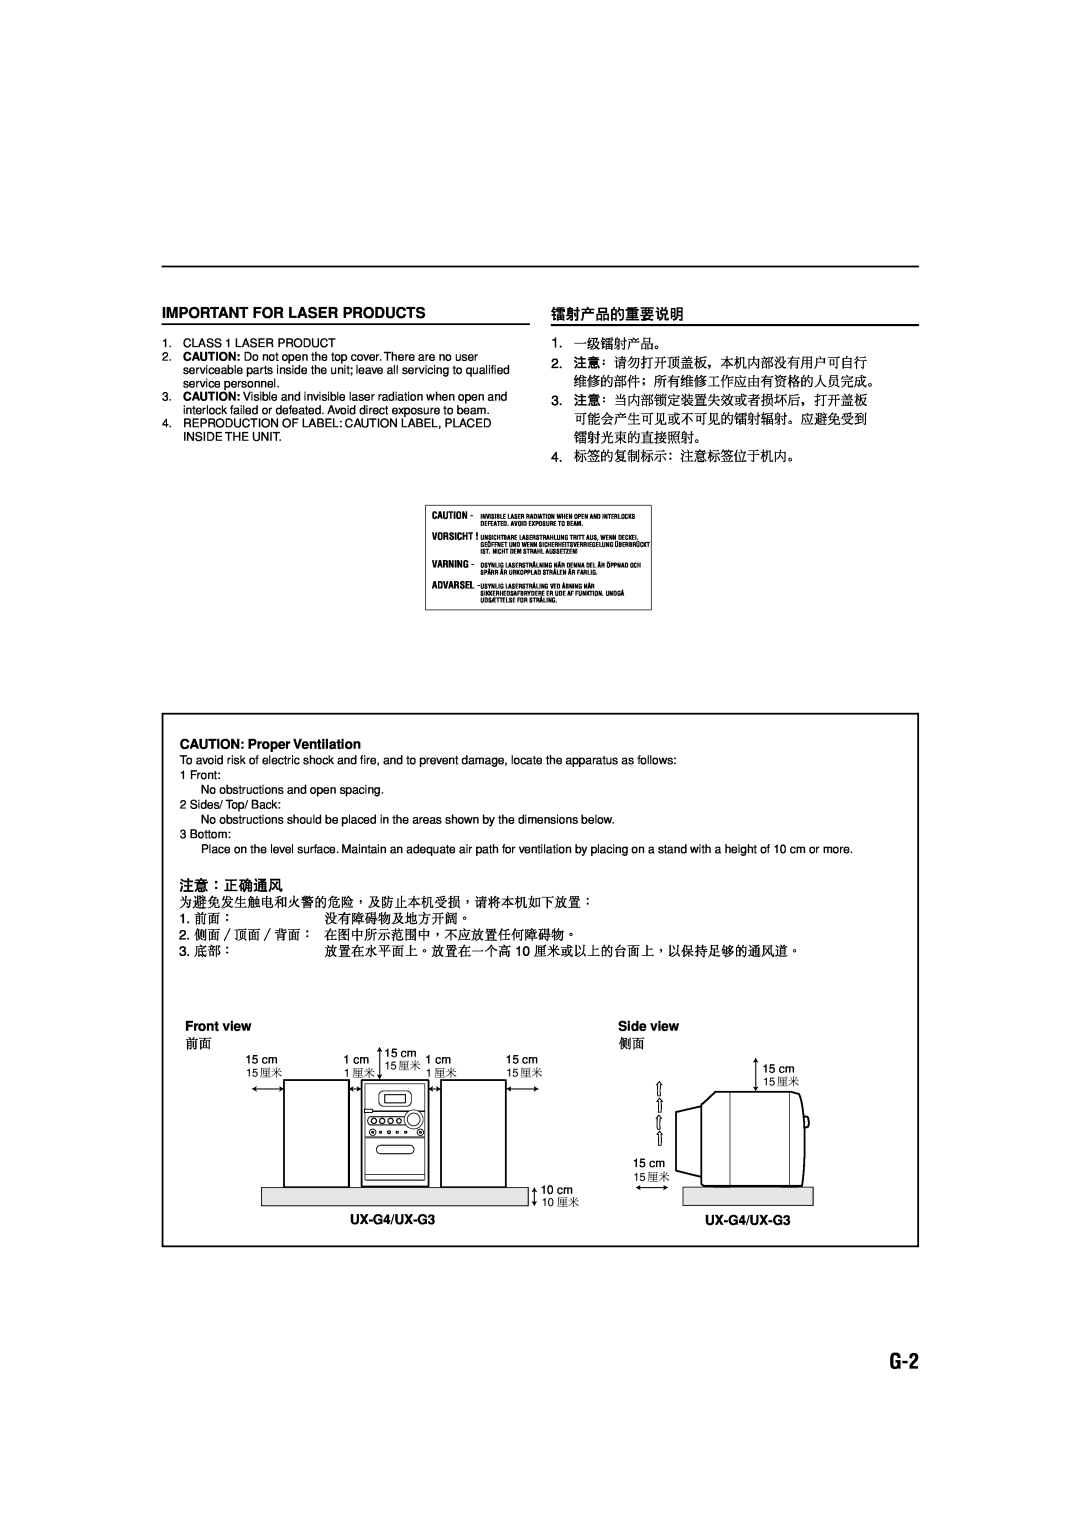 JVC LVT1364-006B manual Important For Laser Products, CAUTION: Proper Ventilation, Front view, Side view, UX-G4/UX-G3 